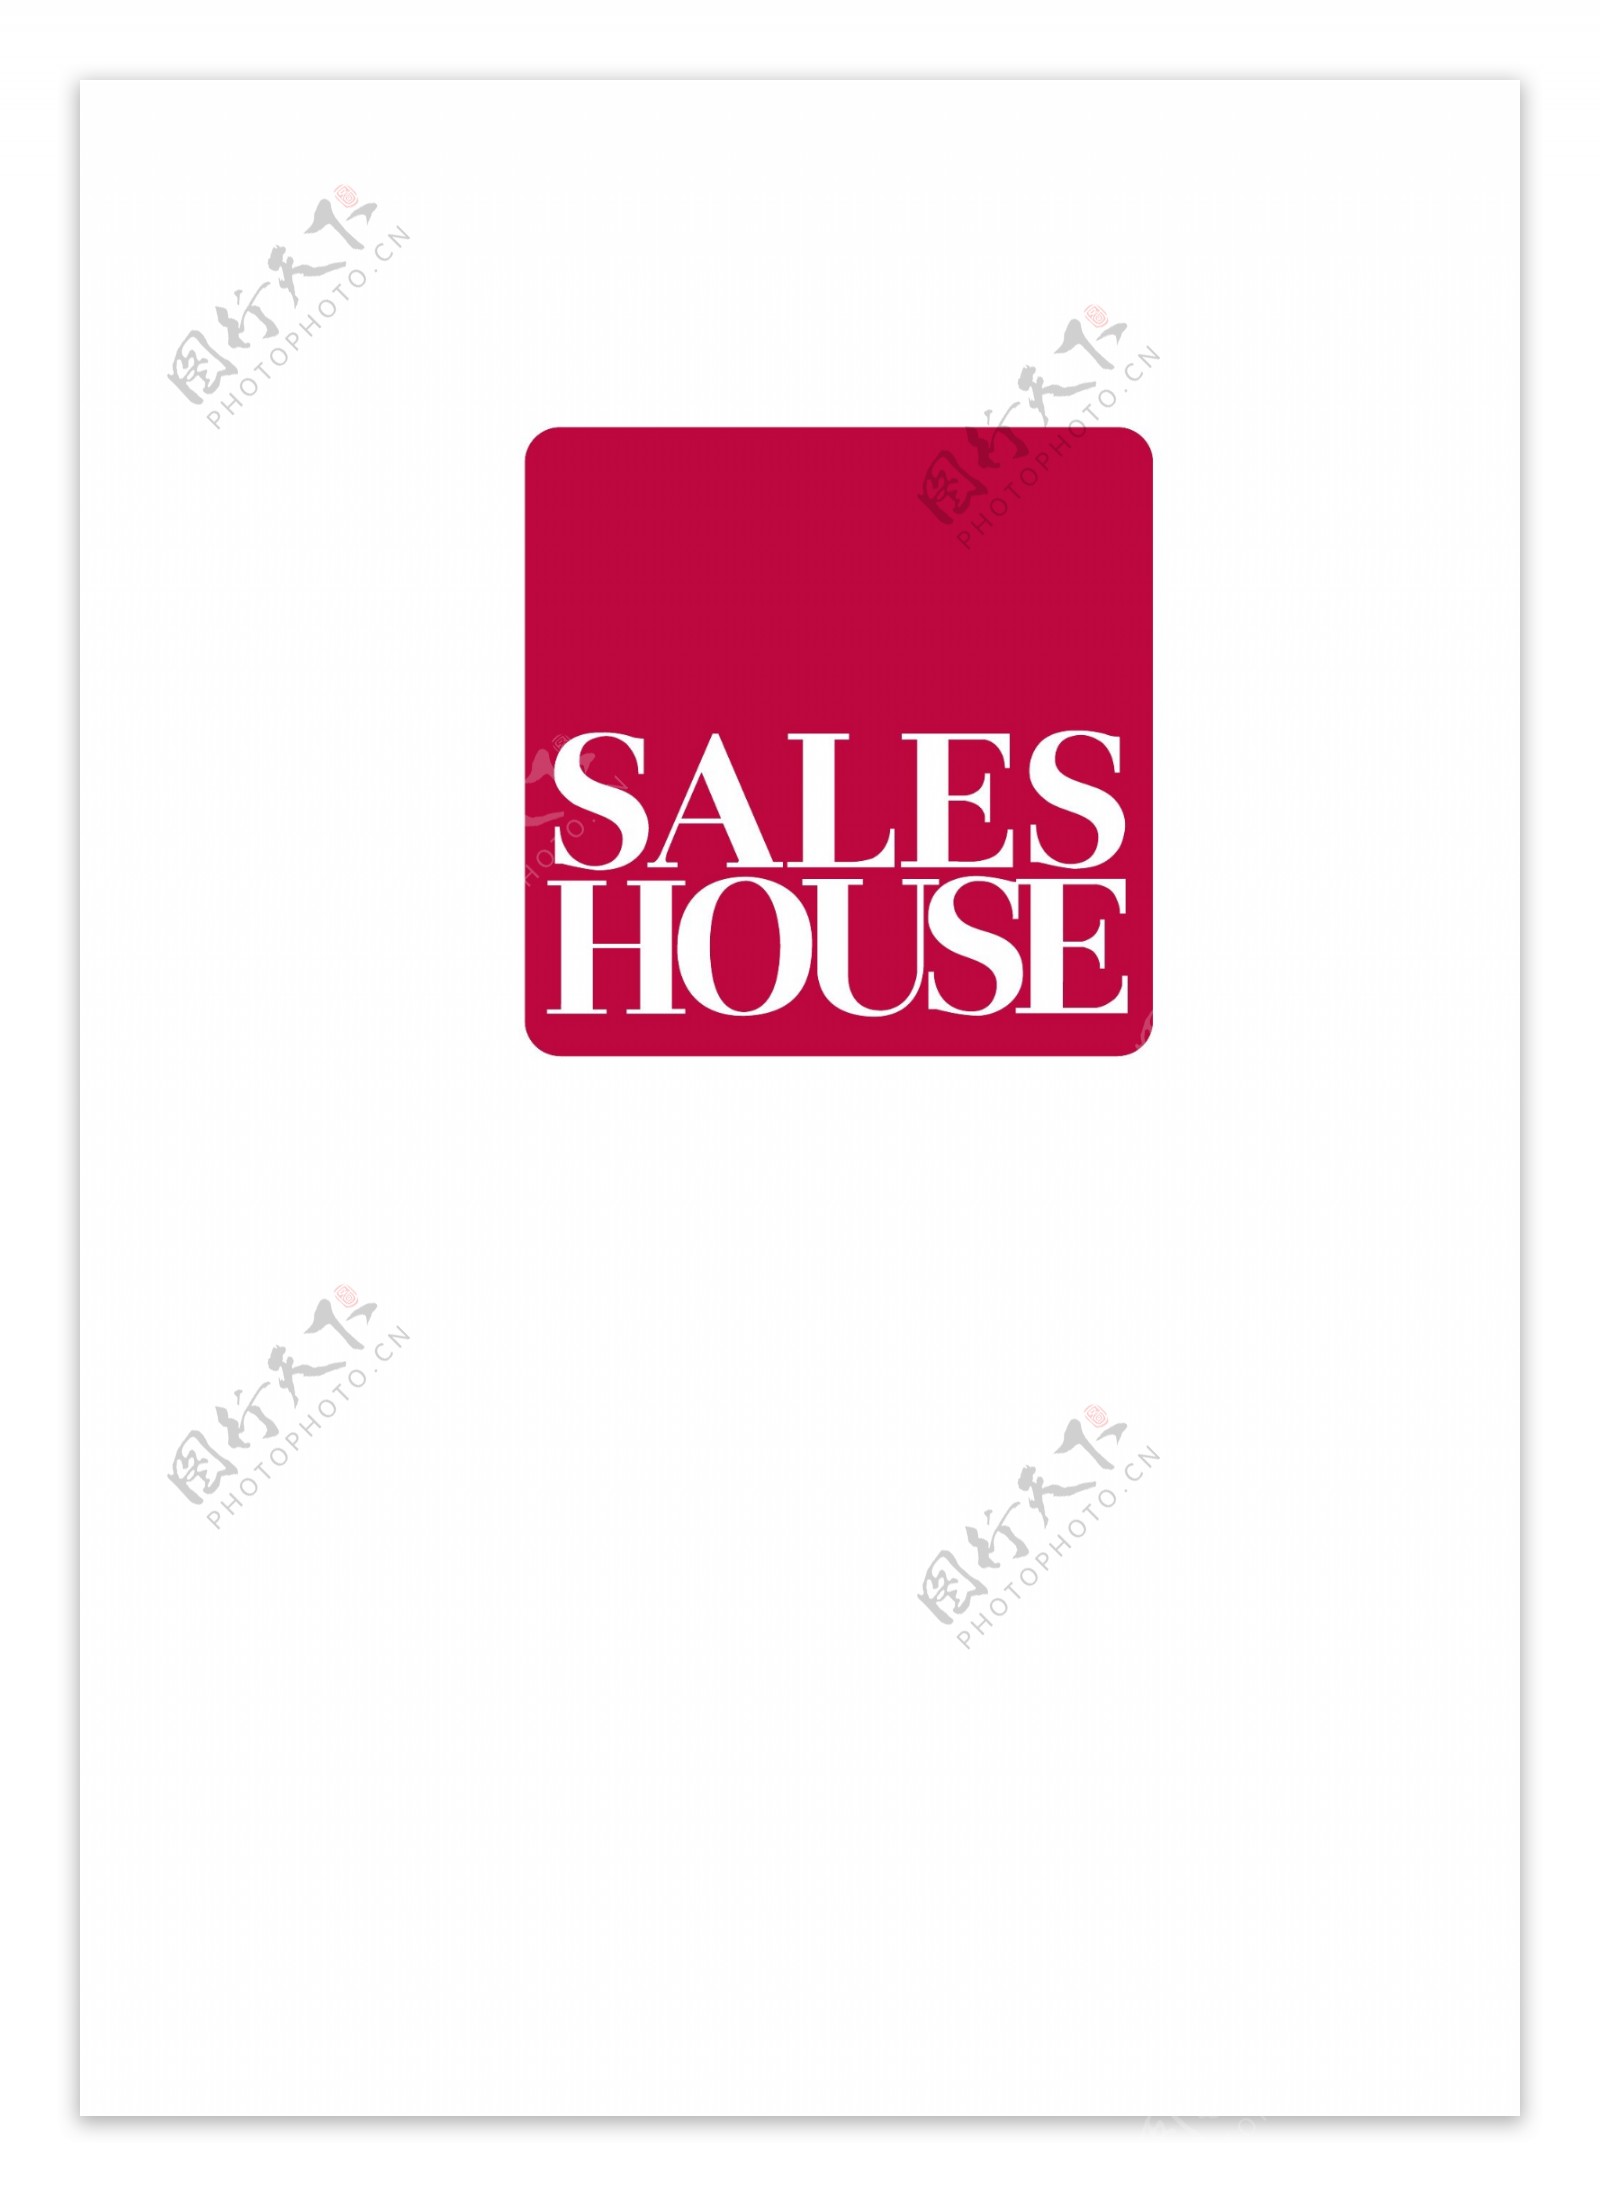 SalesHouselogo设计欣赏SalesHouse名牌衣服标志下载标志设计欣赏